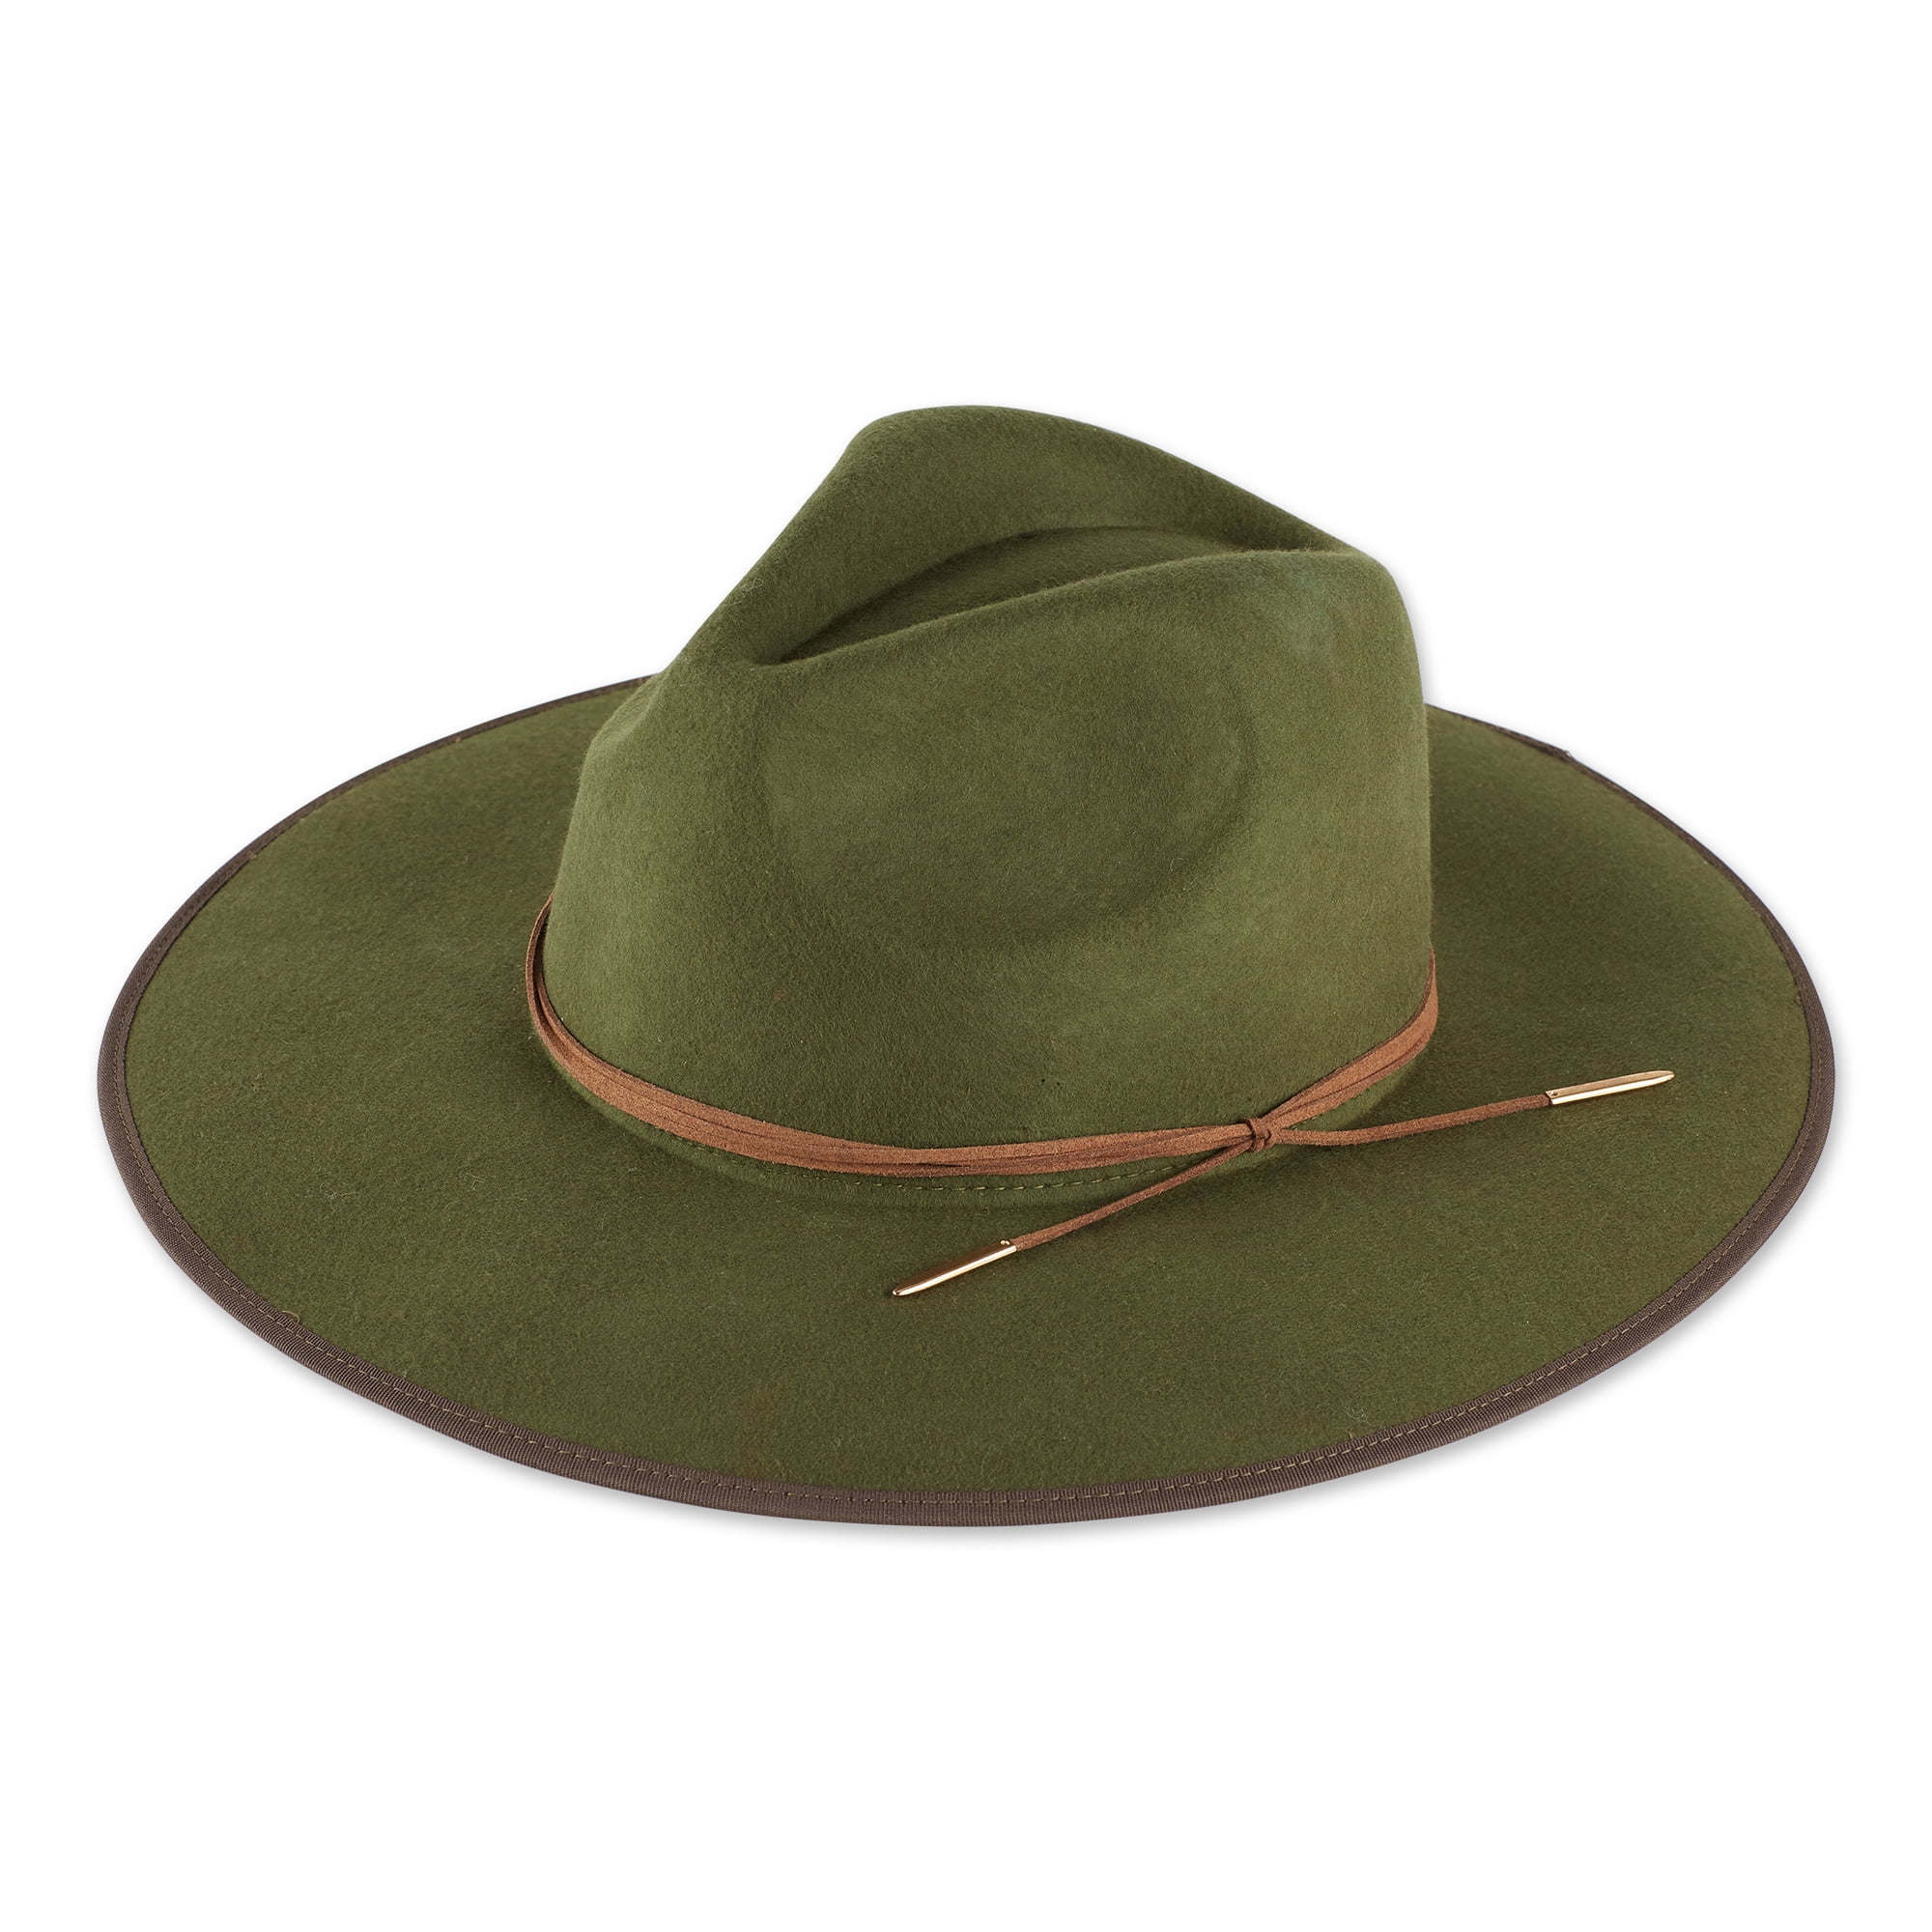 Hadley Wren Faye Wool Panama Hat - Olive Green - Walmart.com